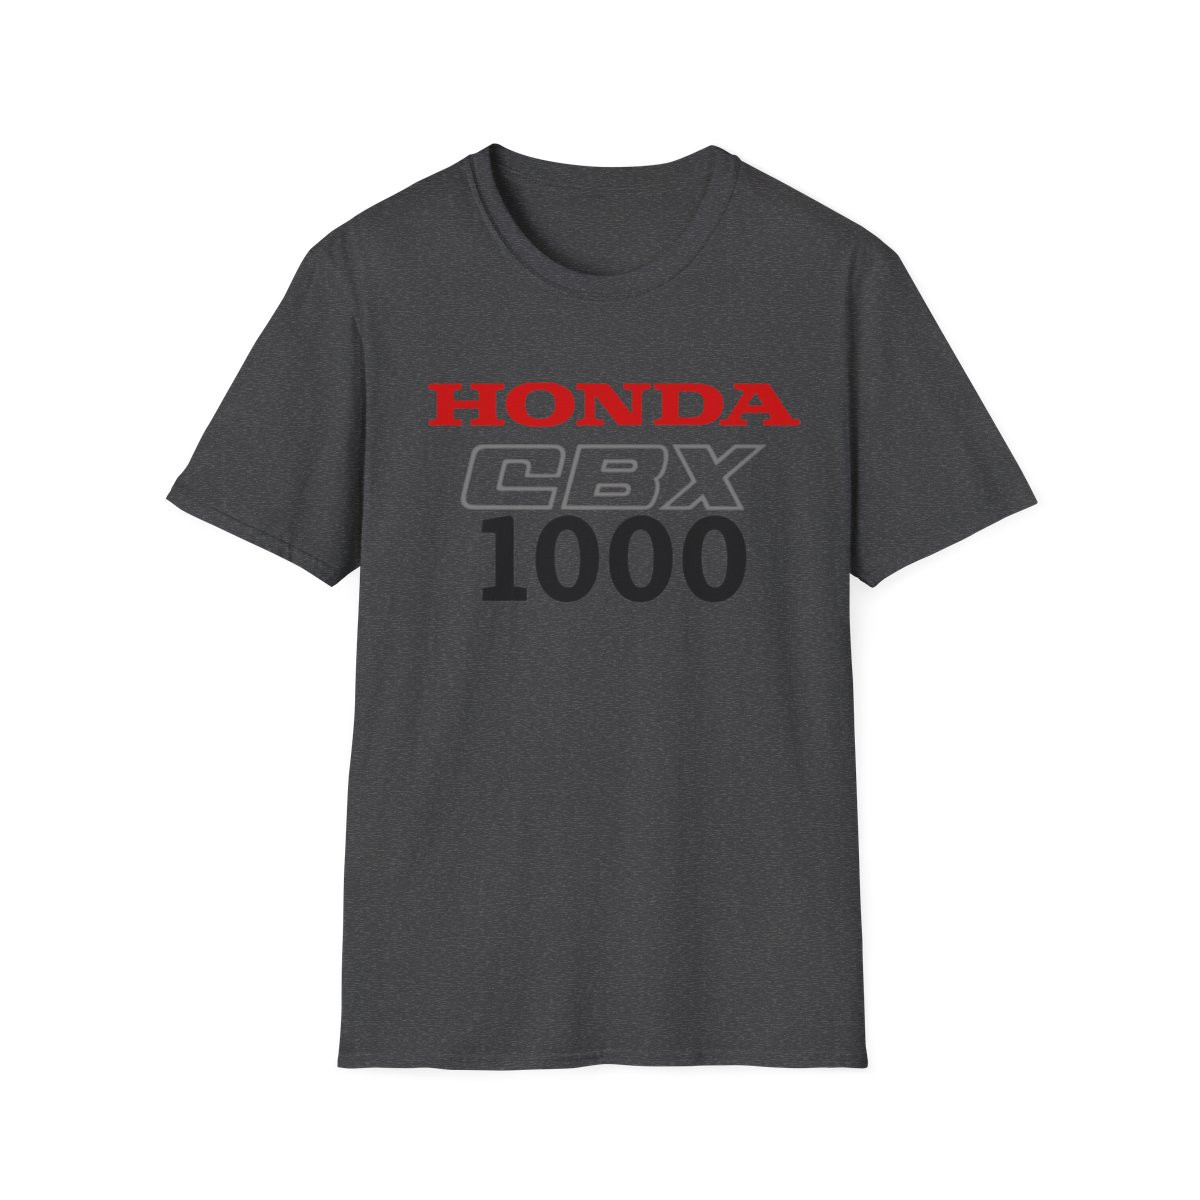 Honda CBX 1000 T-Shirt